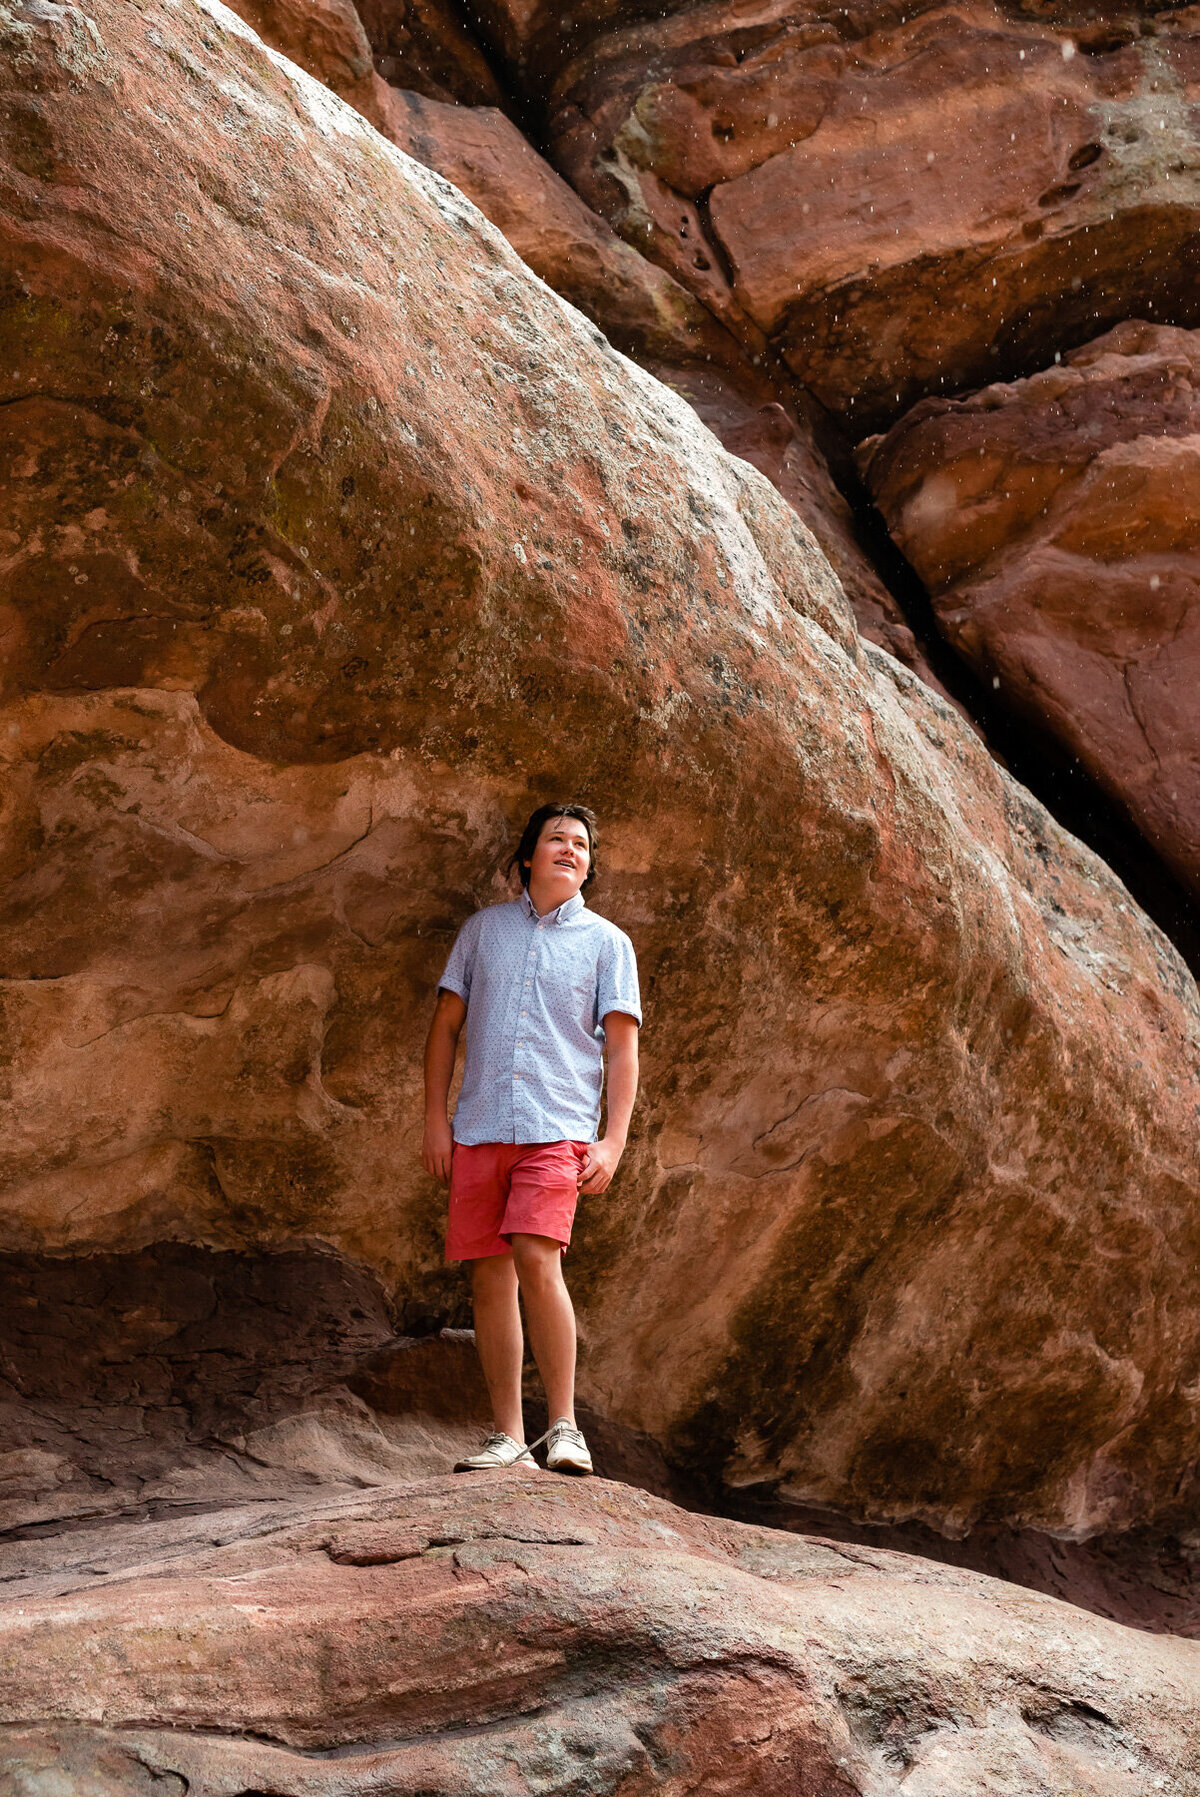 High school senior climbed up colorado rock for professional photo shoot senior year